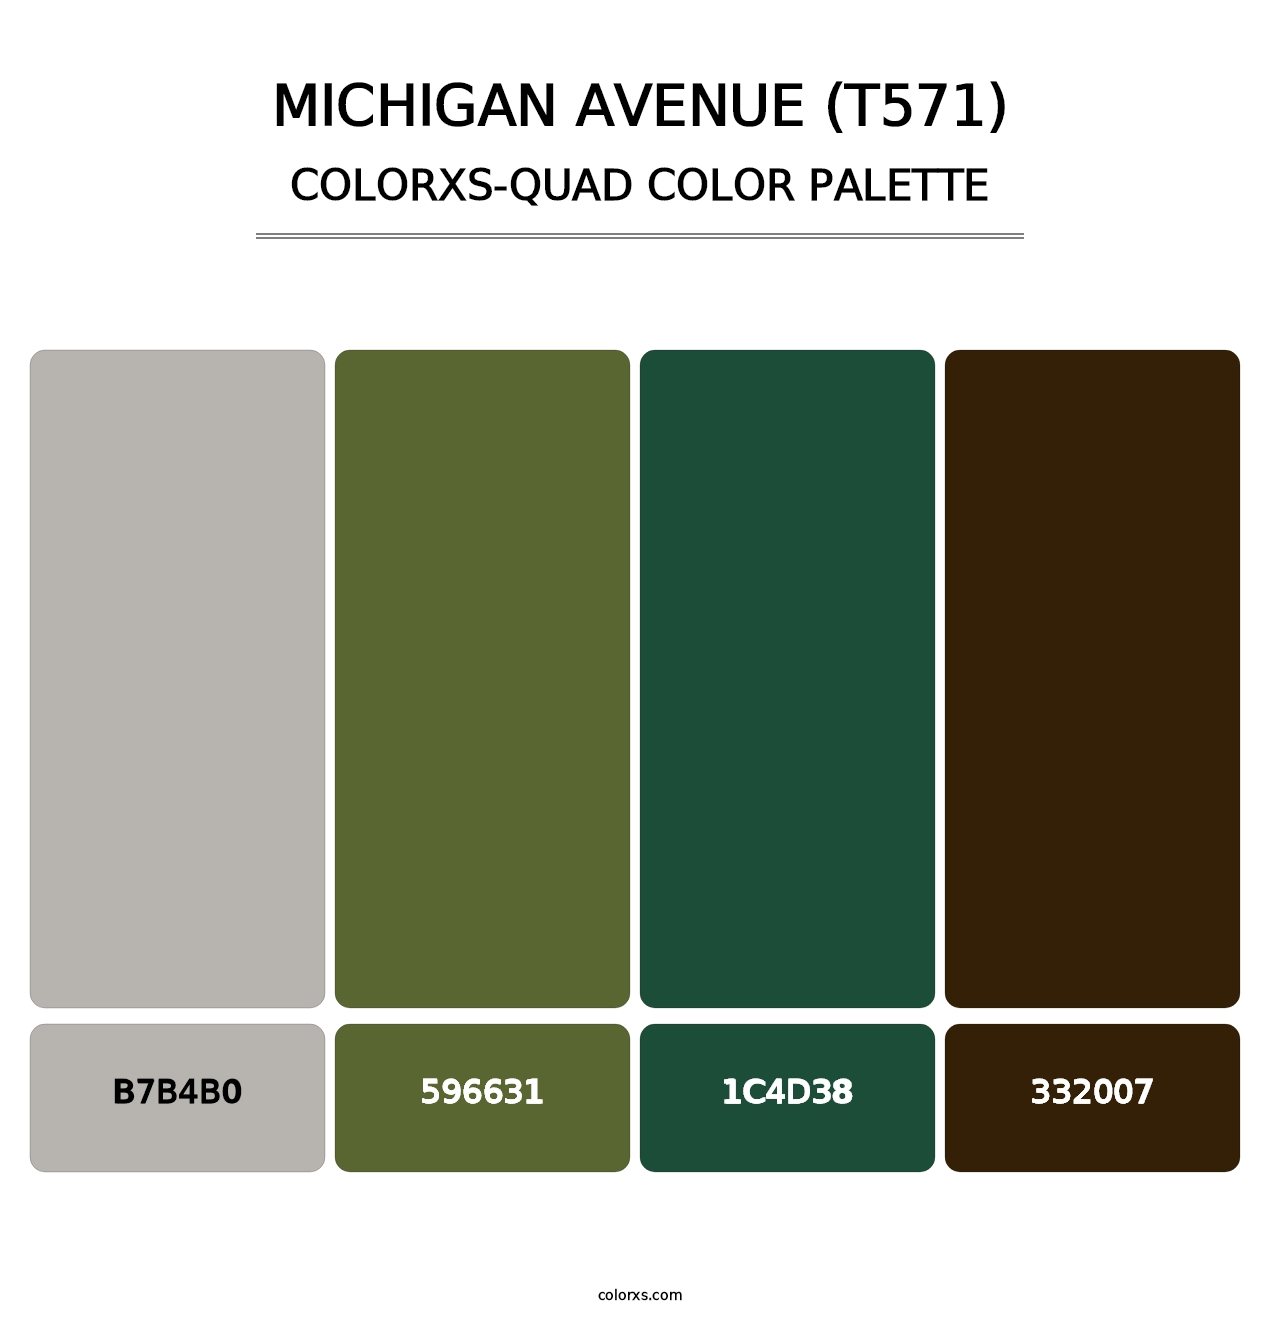 Michigan Avenue (T571) - Colorxs Quad Palette